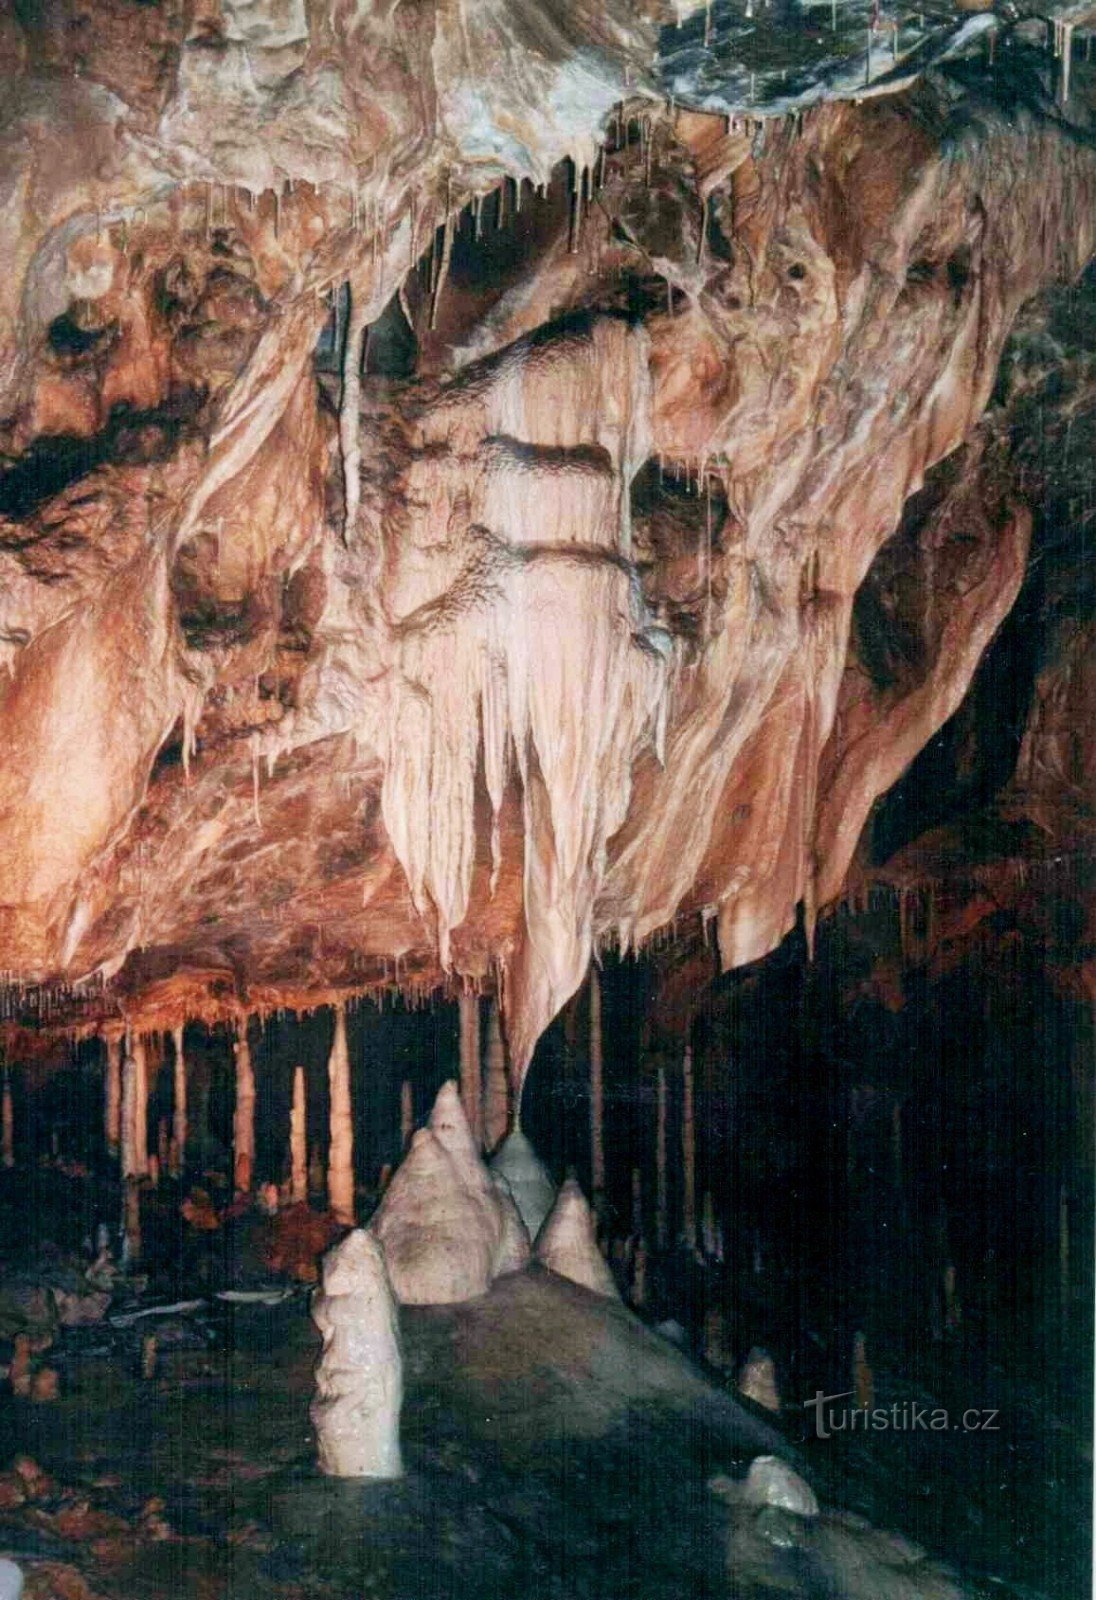 Javoříč Caves